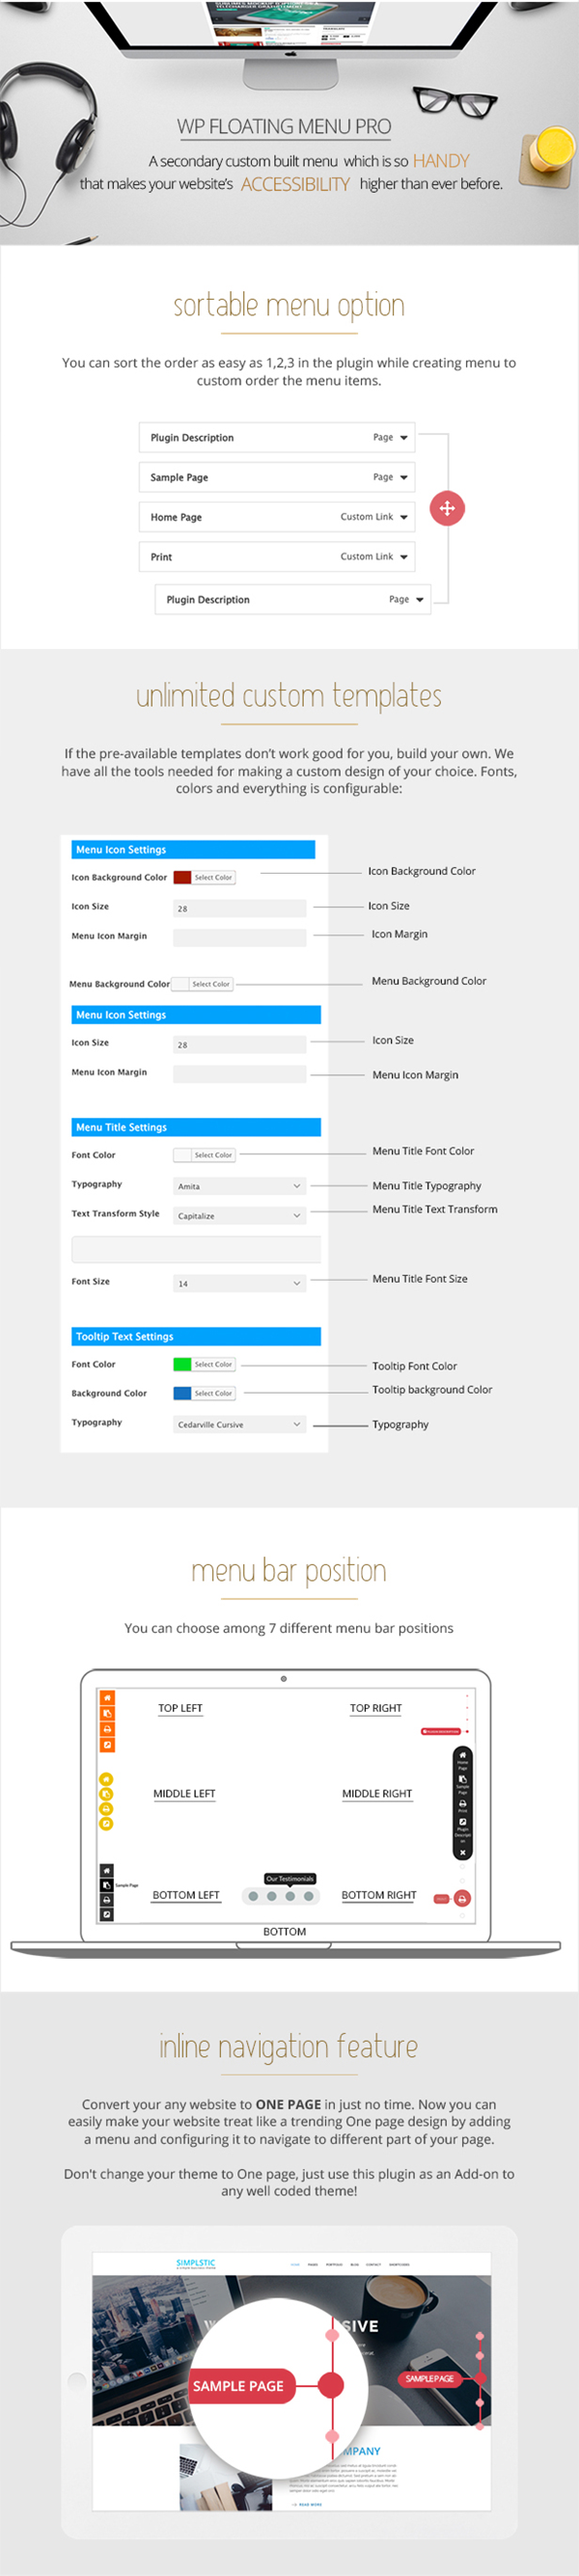 WP Floating Menu Pro - One page navigator, sticky menu for WordPress - 4